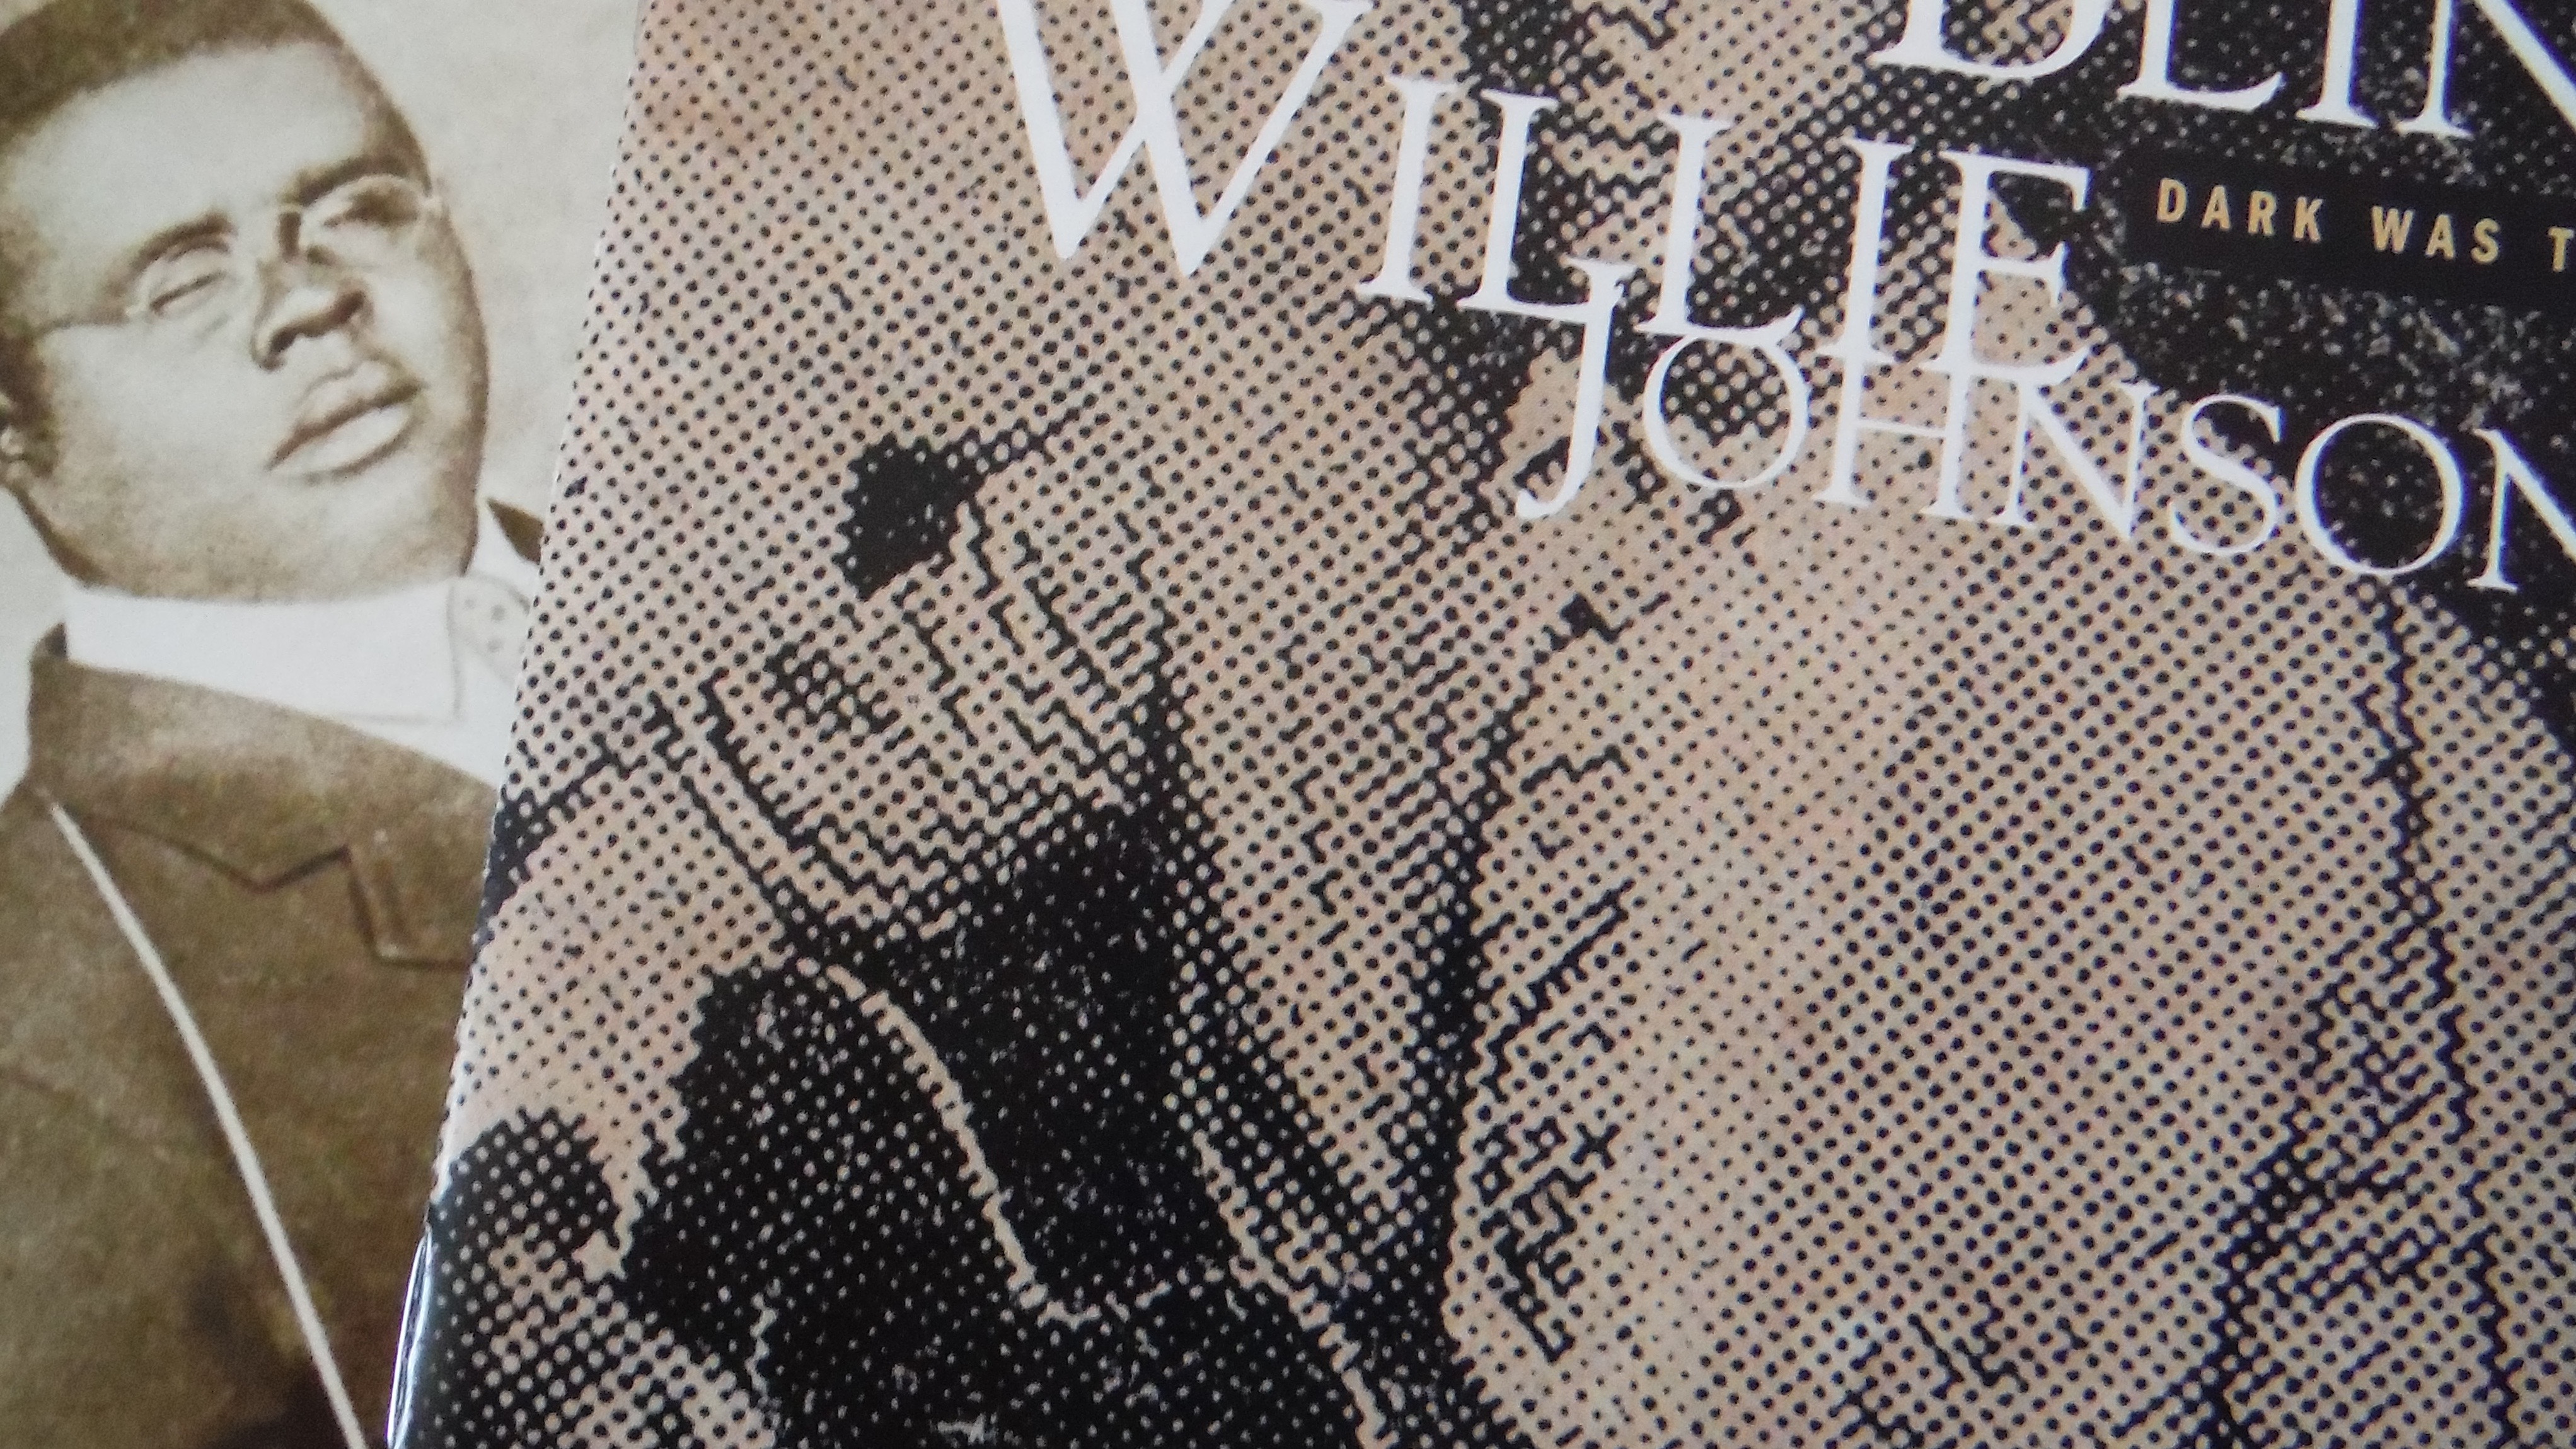 Revelation Blind Willie Johnson The Biography. by D.N. Blakey